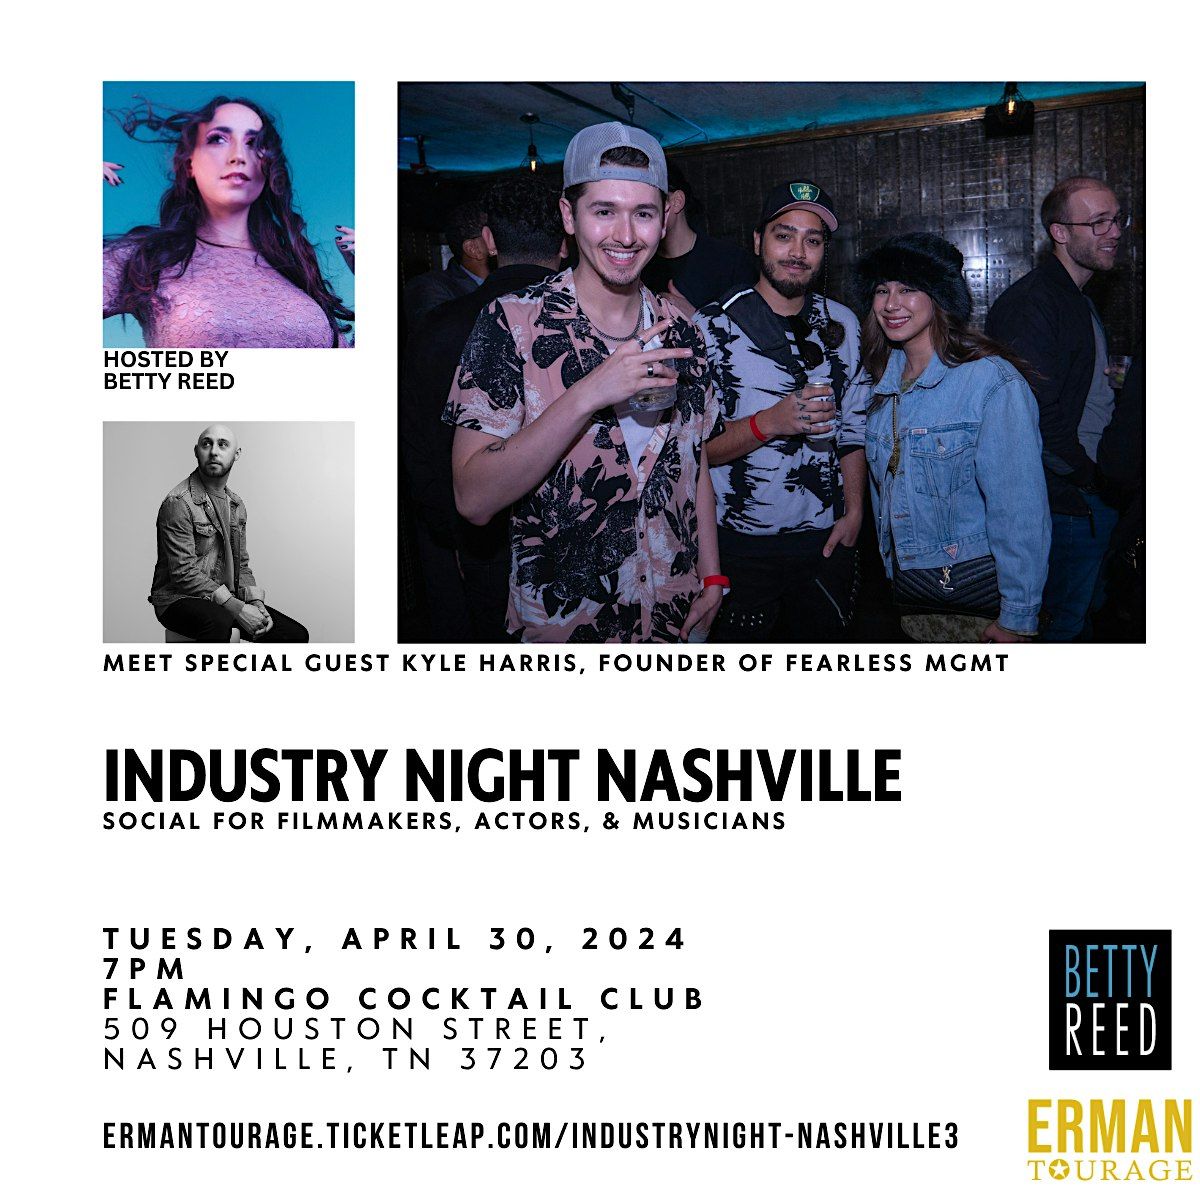 Industry Night Nashville 2: Music, Film, & More!